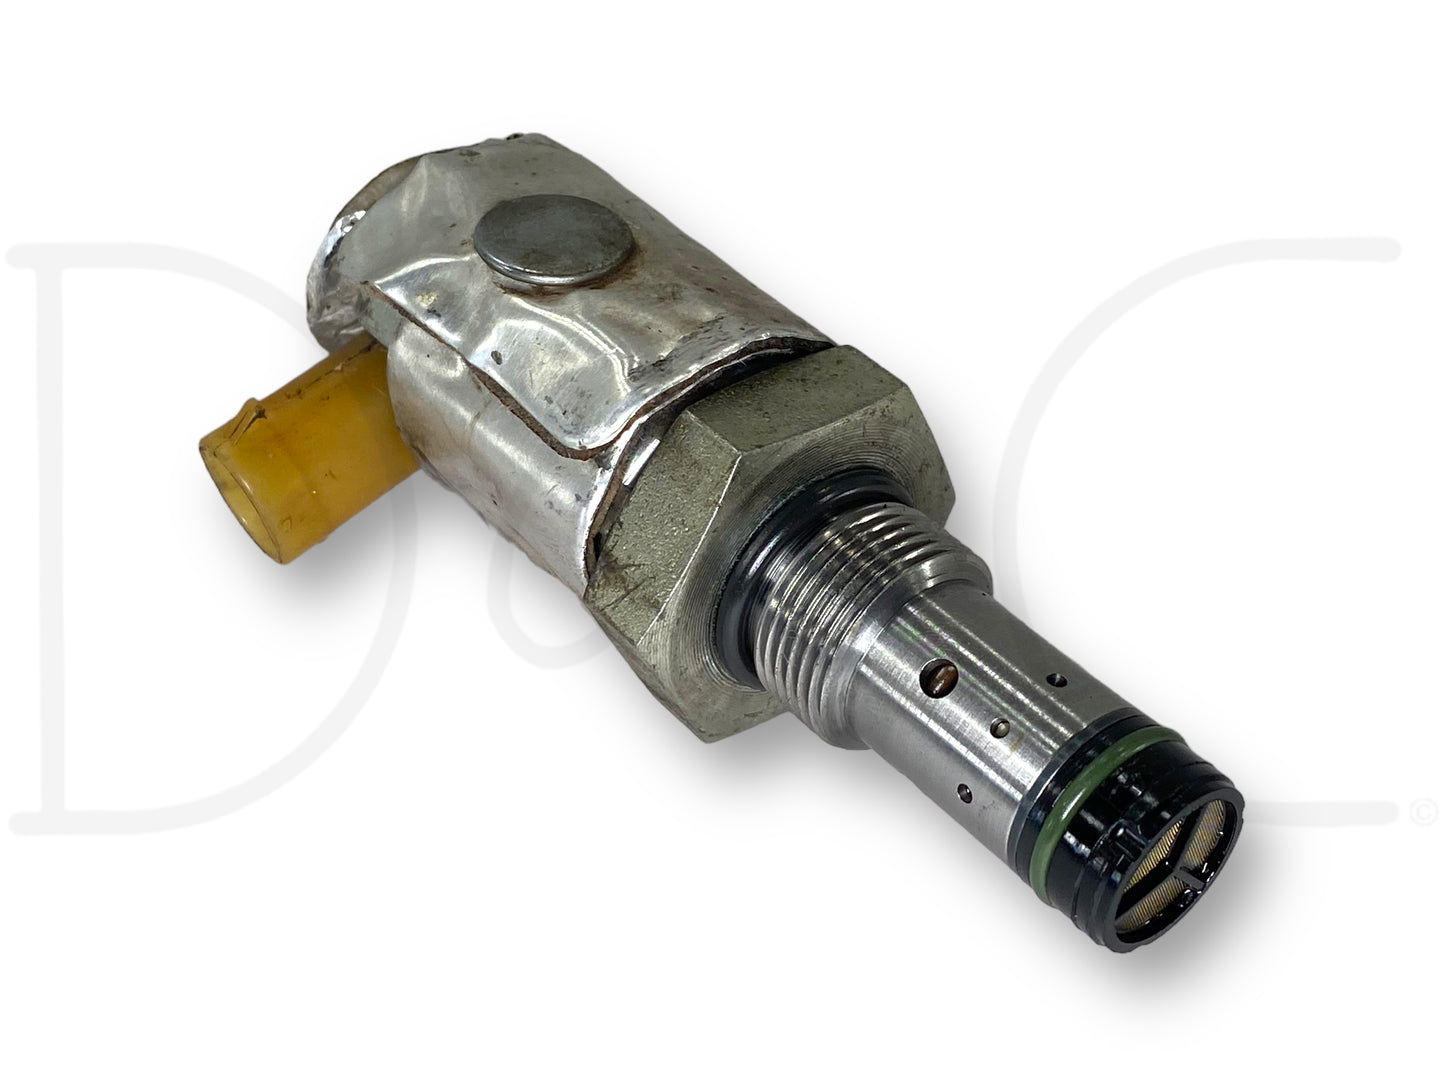 03-07 Ford 6.0 6.0L Diesel IPR Valve Injector Pressure Regulator 1846057C1 OEM